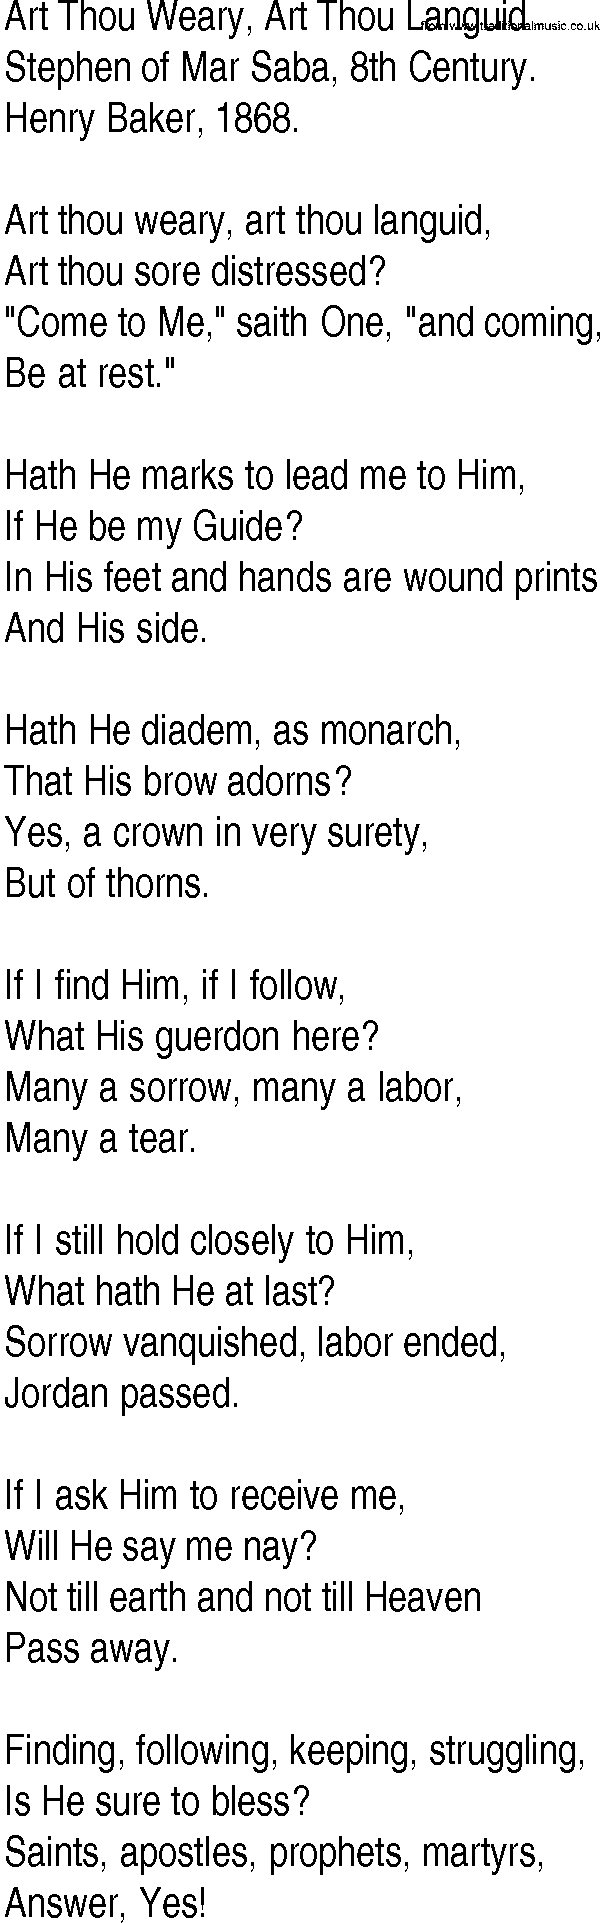 Hymn and Gospel Song: Art Thou Weary, Art Thou Languid by Stephen of Mar Saba th Century lyrics